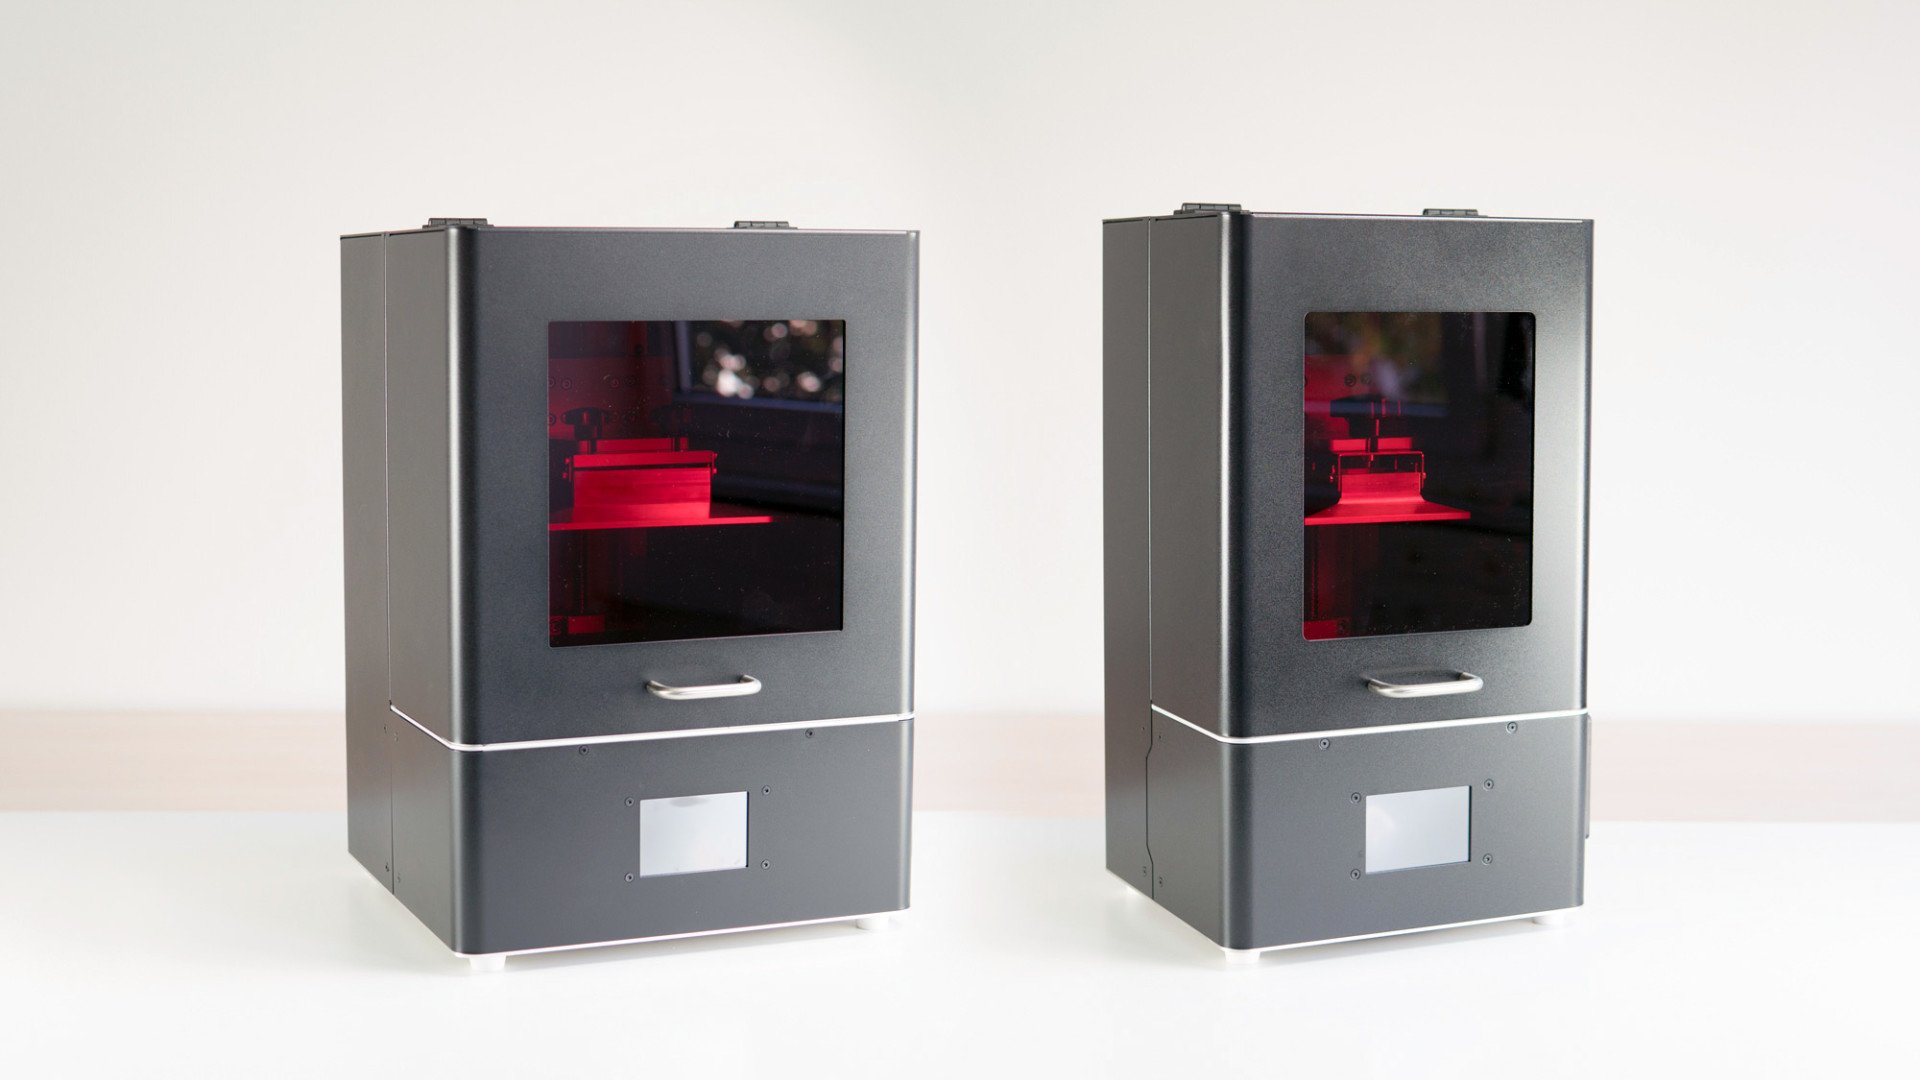 Image by All3DP and Phrozen: The Phrozen Shuffle and Phrozen Shuffle XL resin 3D-printer